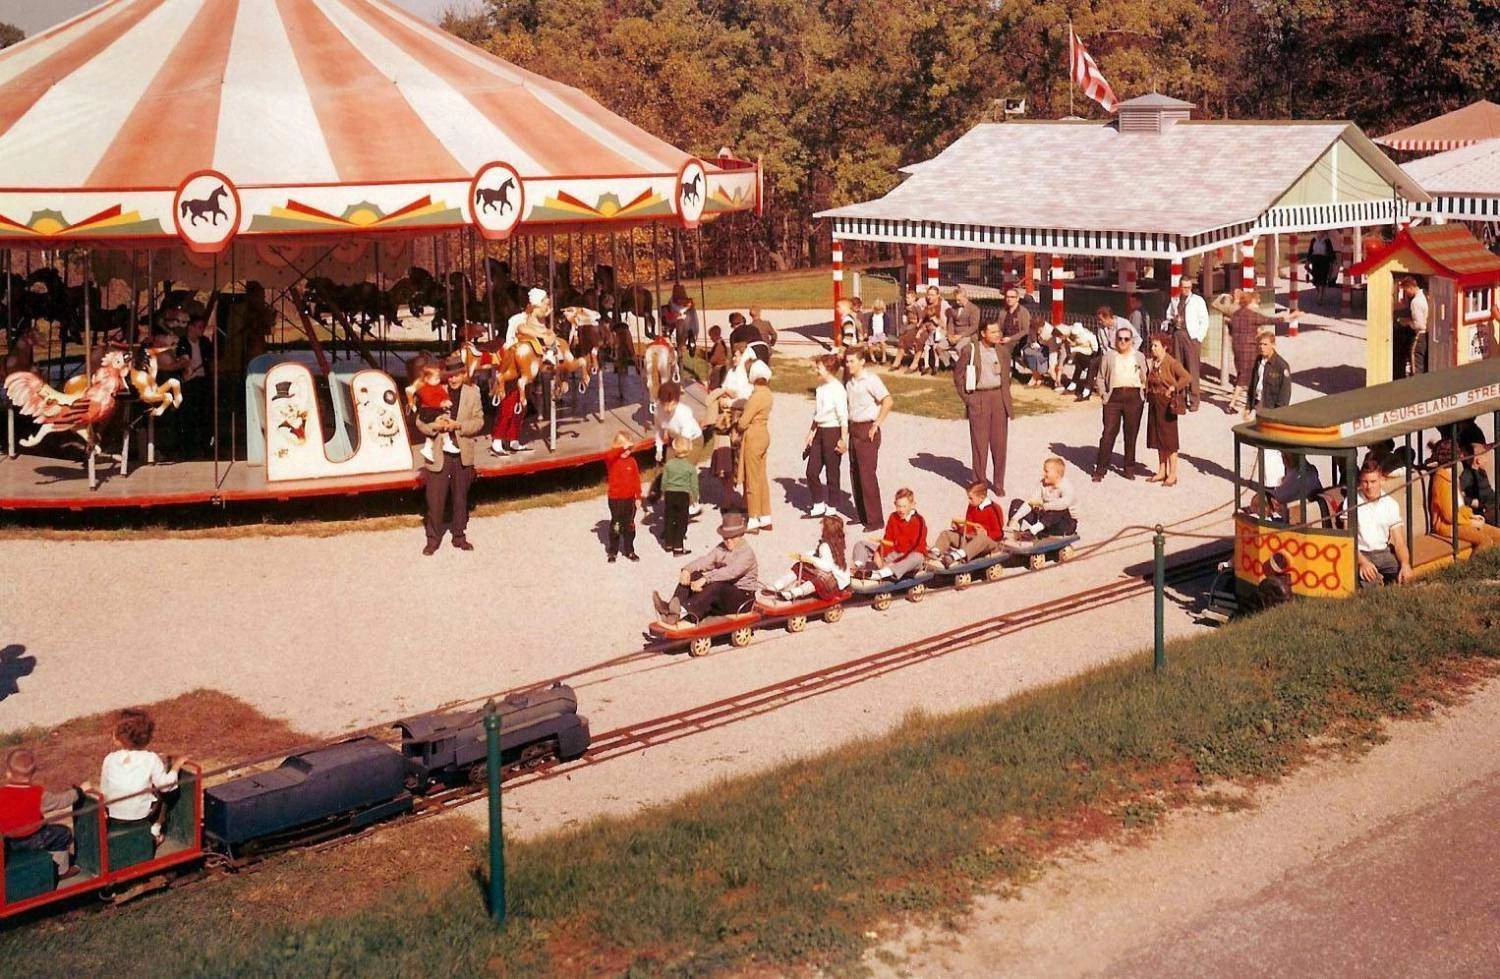 "Pleasureland" in Santa Claus Land, circa 1950. Several rides from Pleasureland still exist today in Rudolph's Reindeer Ranch.